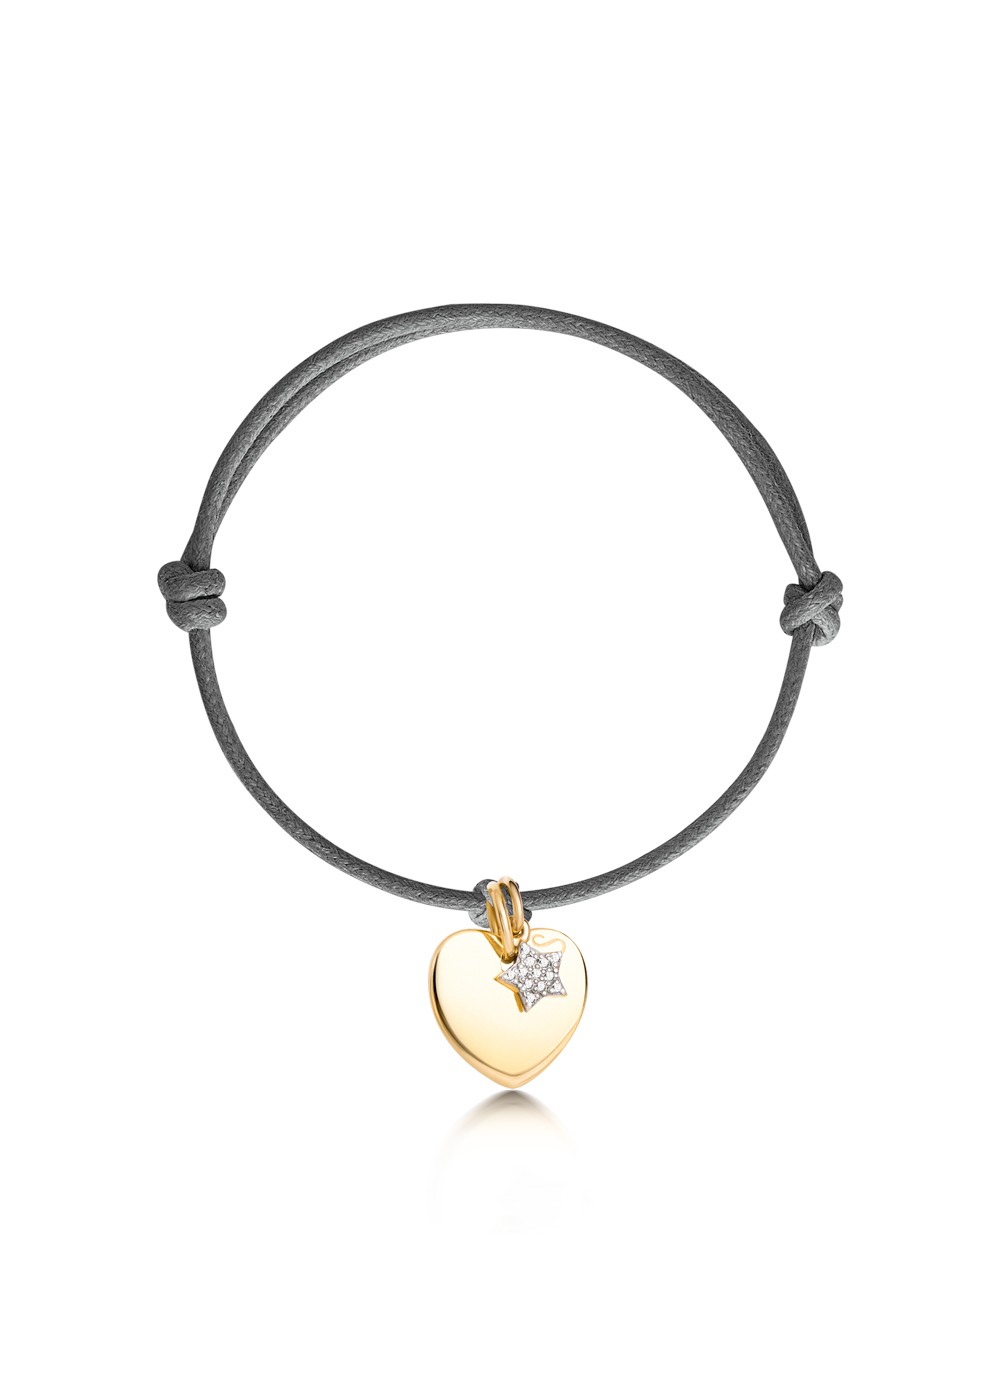 Mini Heart bracelet with Zirconium Star charm